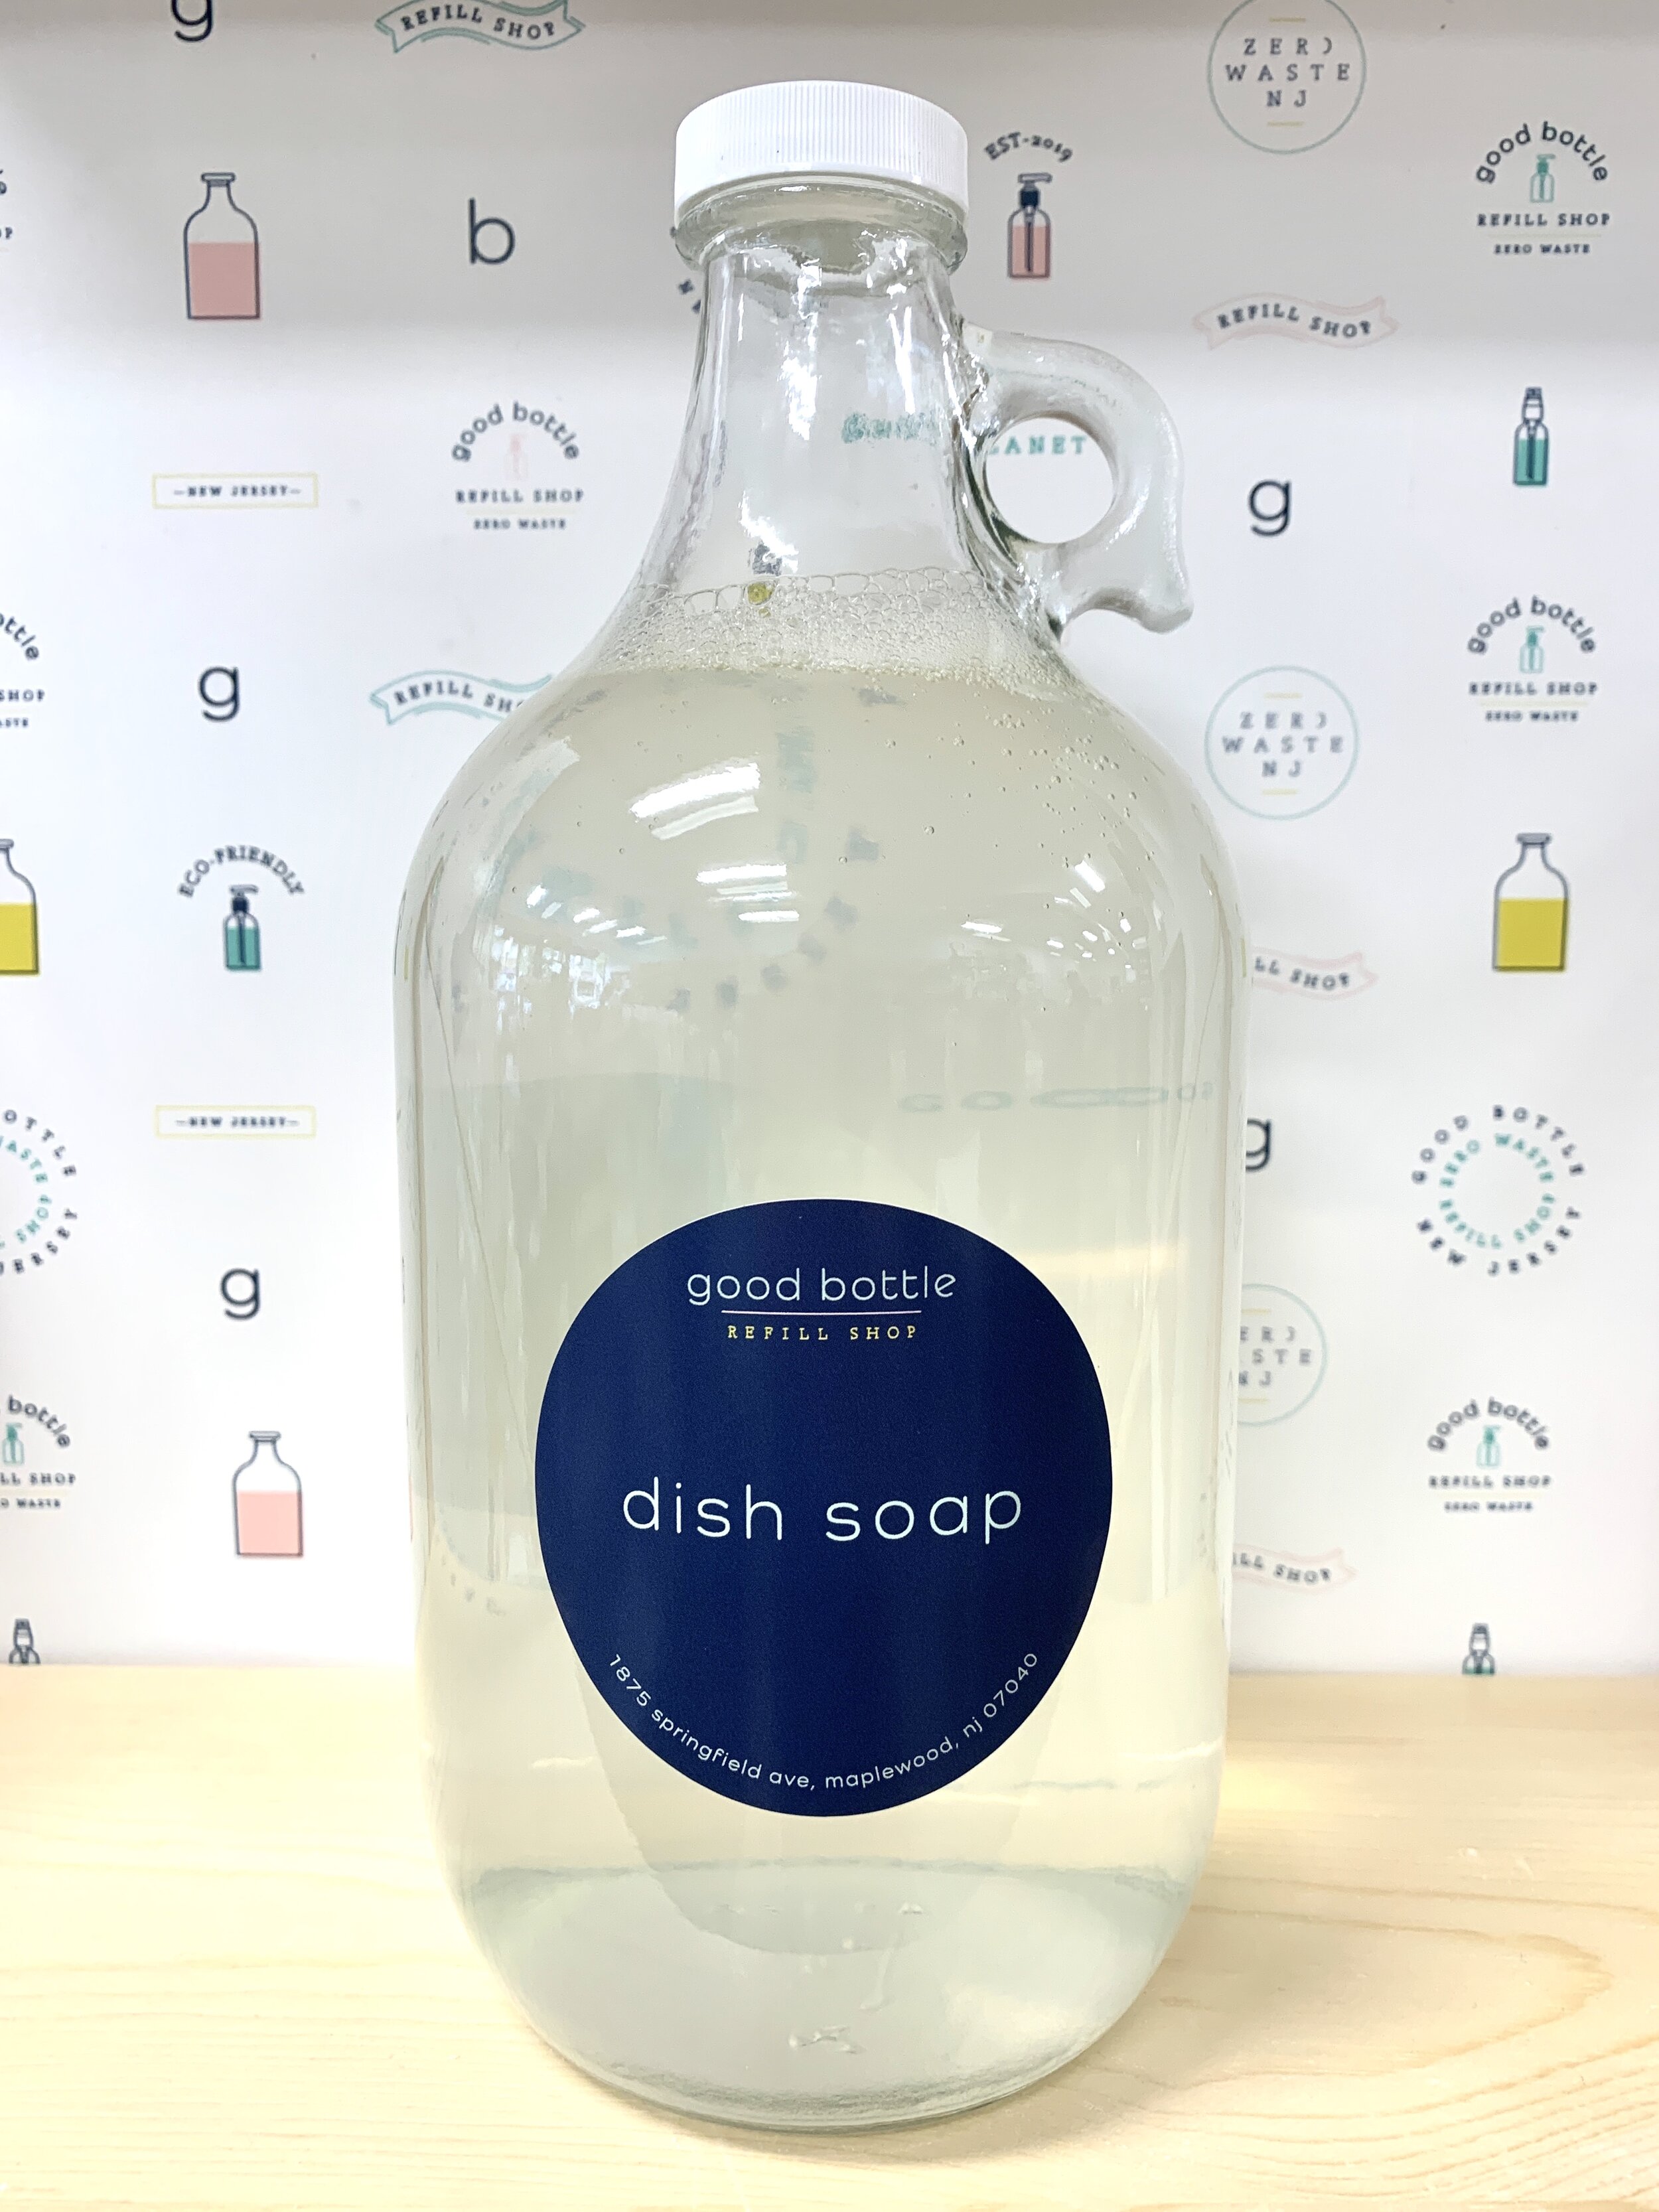 DISH SOAP — good bottle refill shop